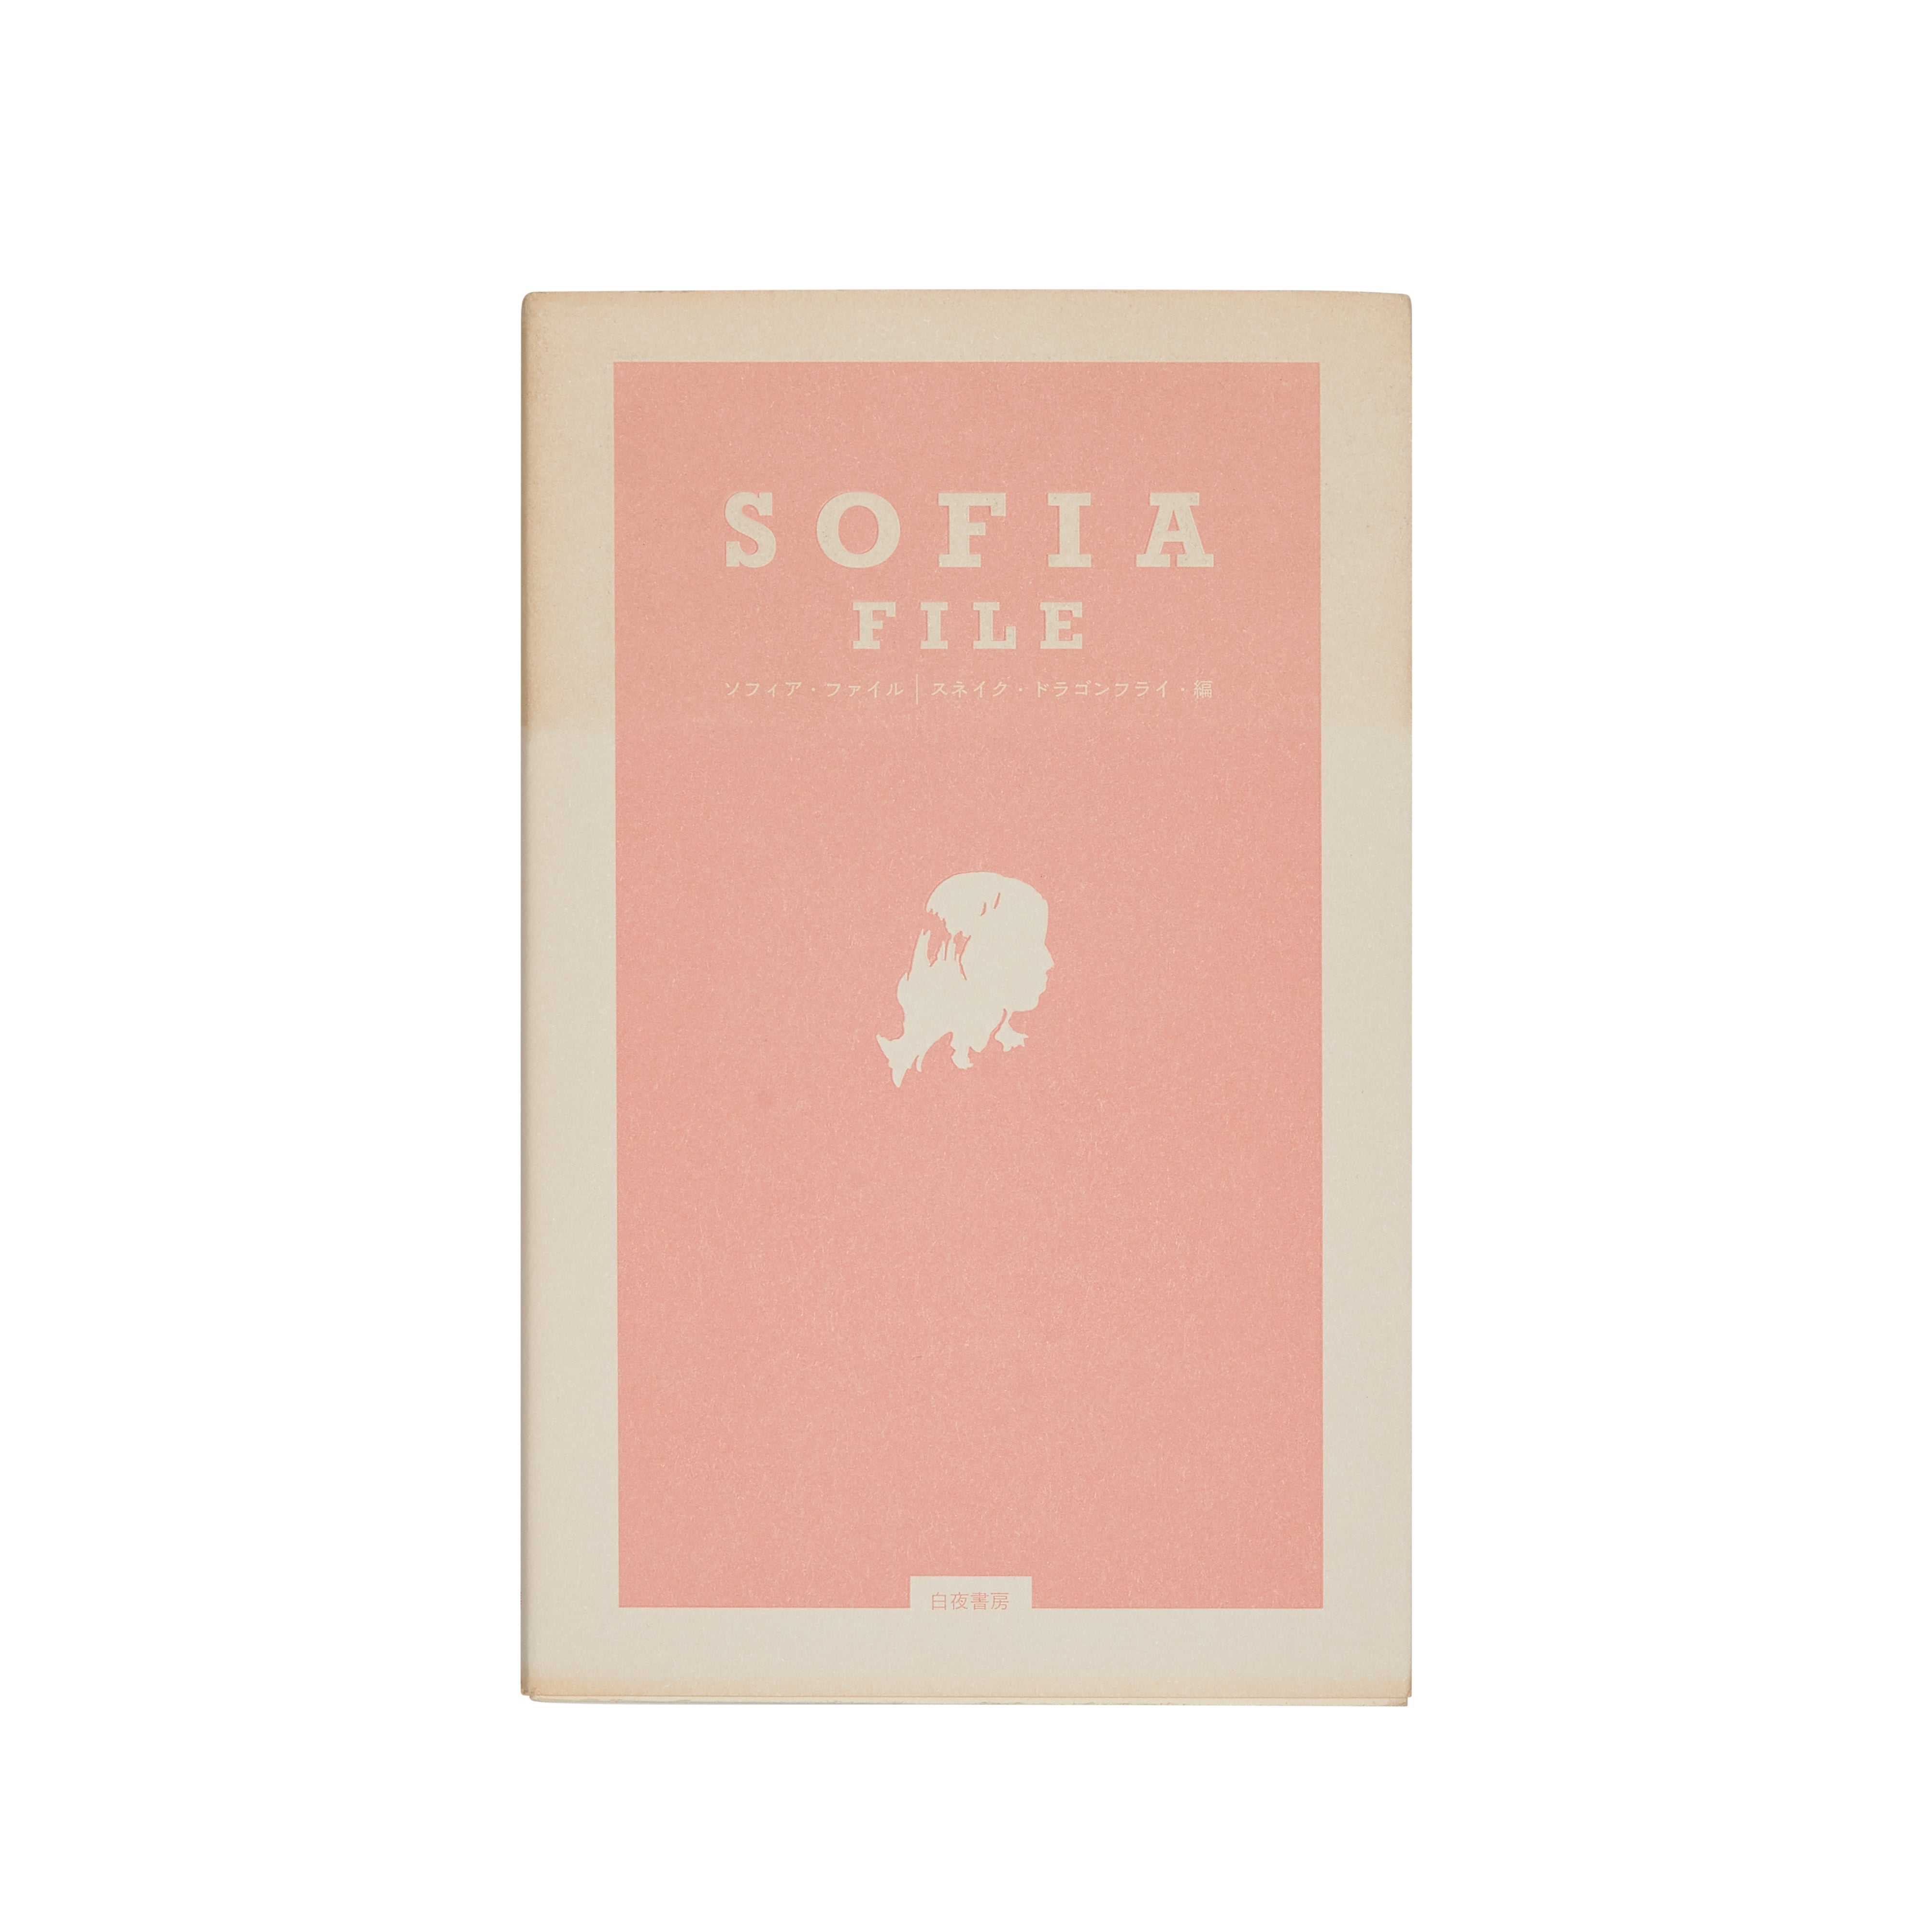 Climax Books - Sofia File 1st Edition